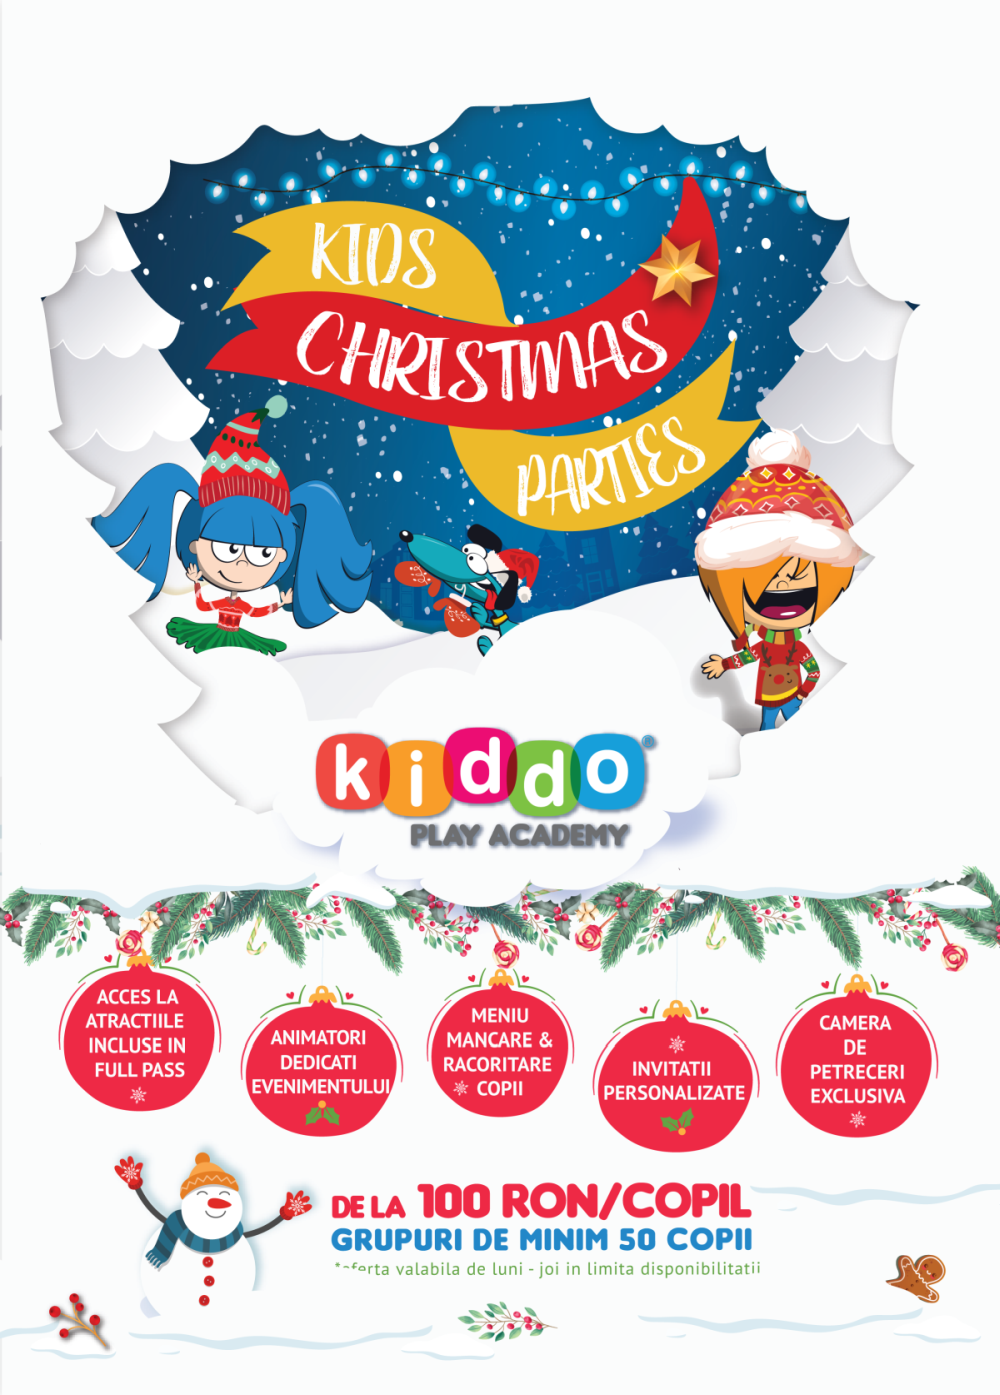 Kids Christmas Parties Kiddo Play Academy